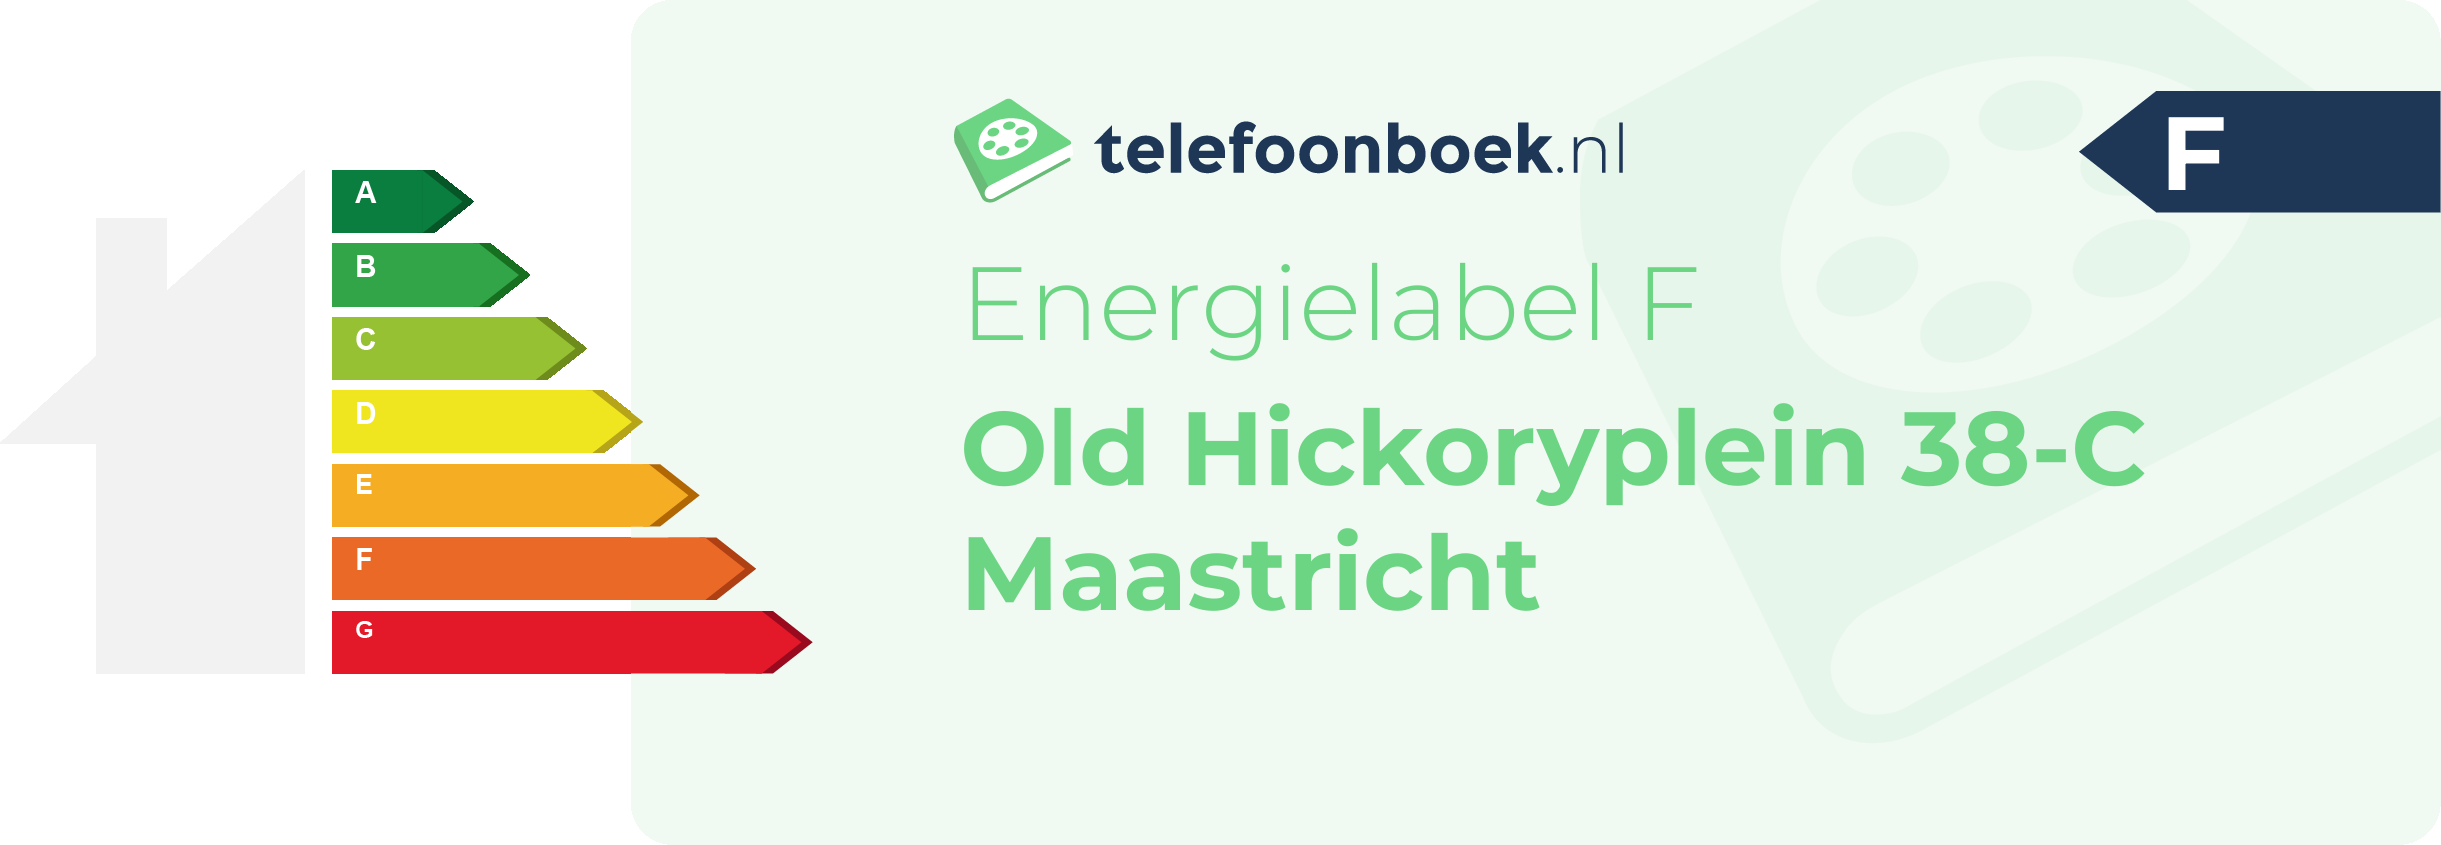 Energielabel Old Hickoryplein 38-C Maastricht